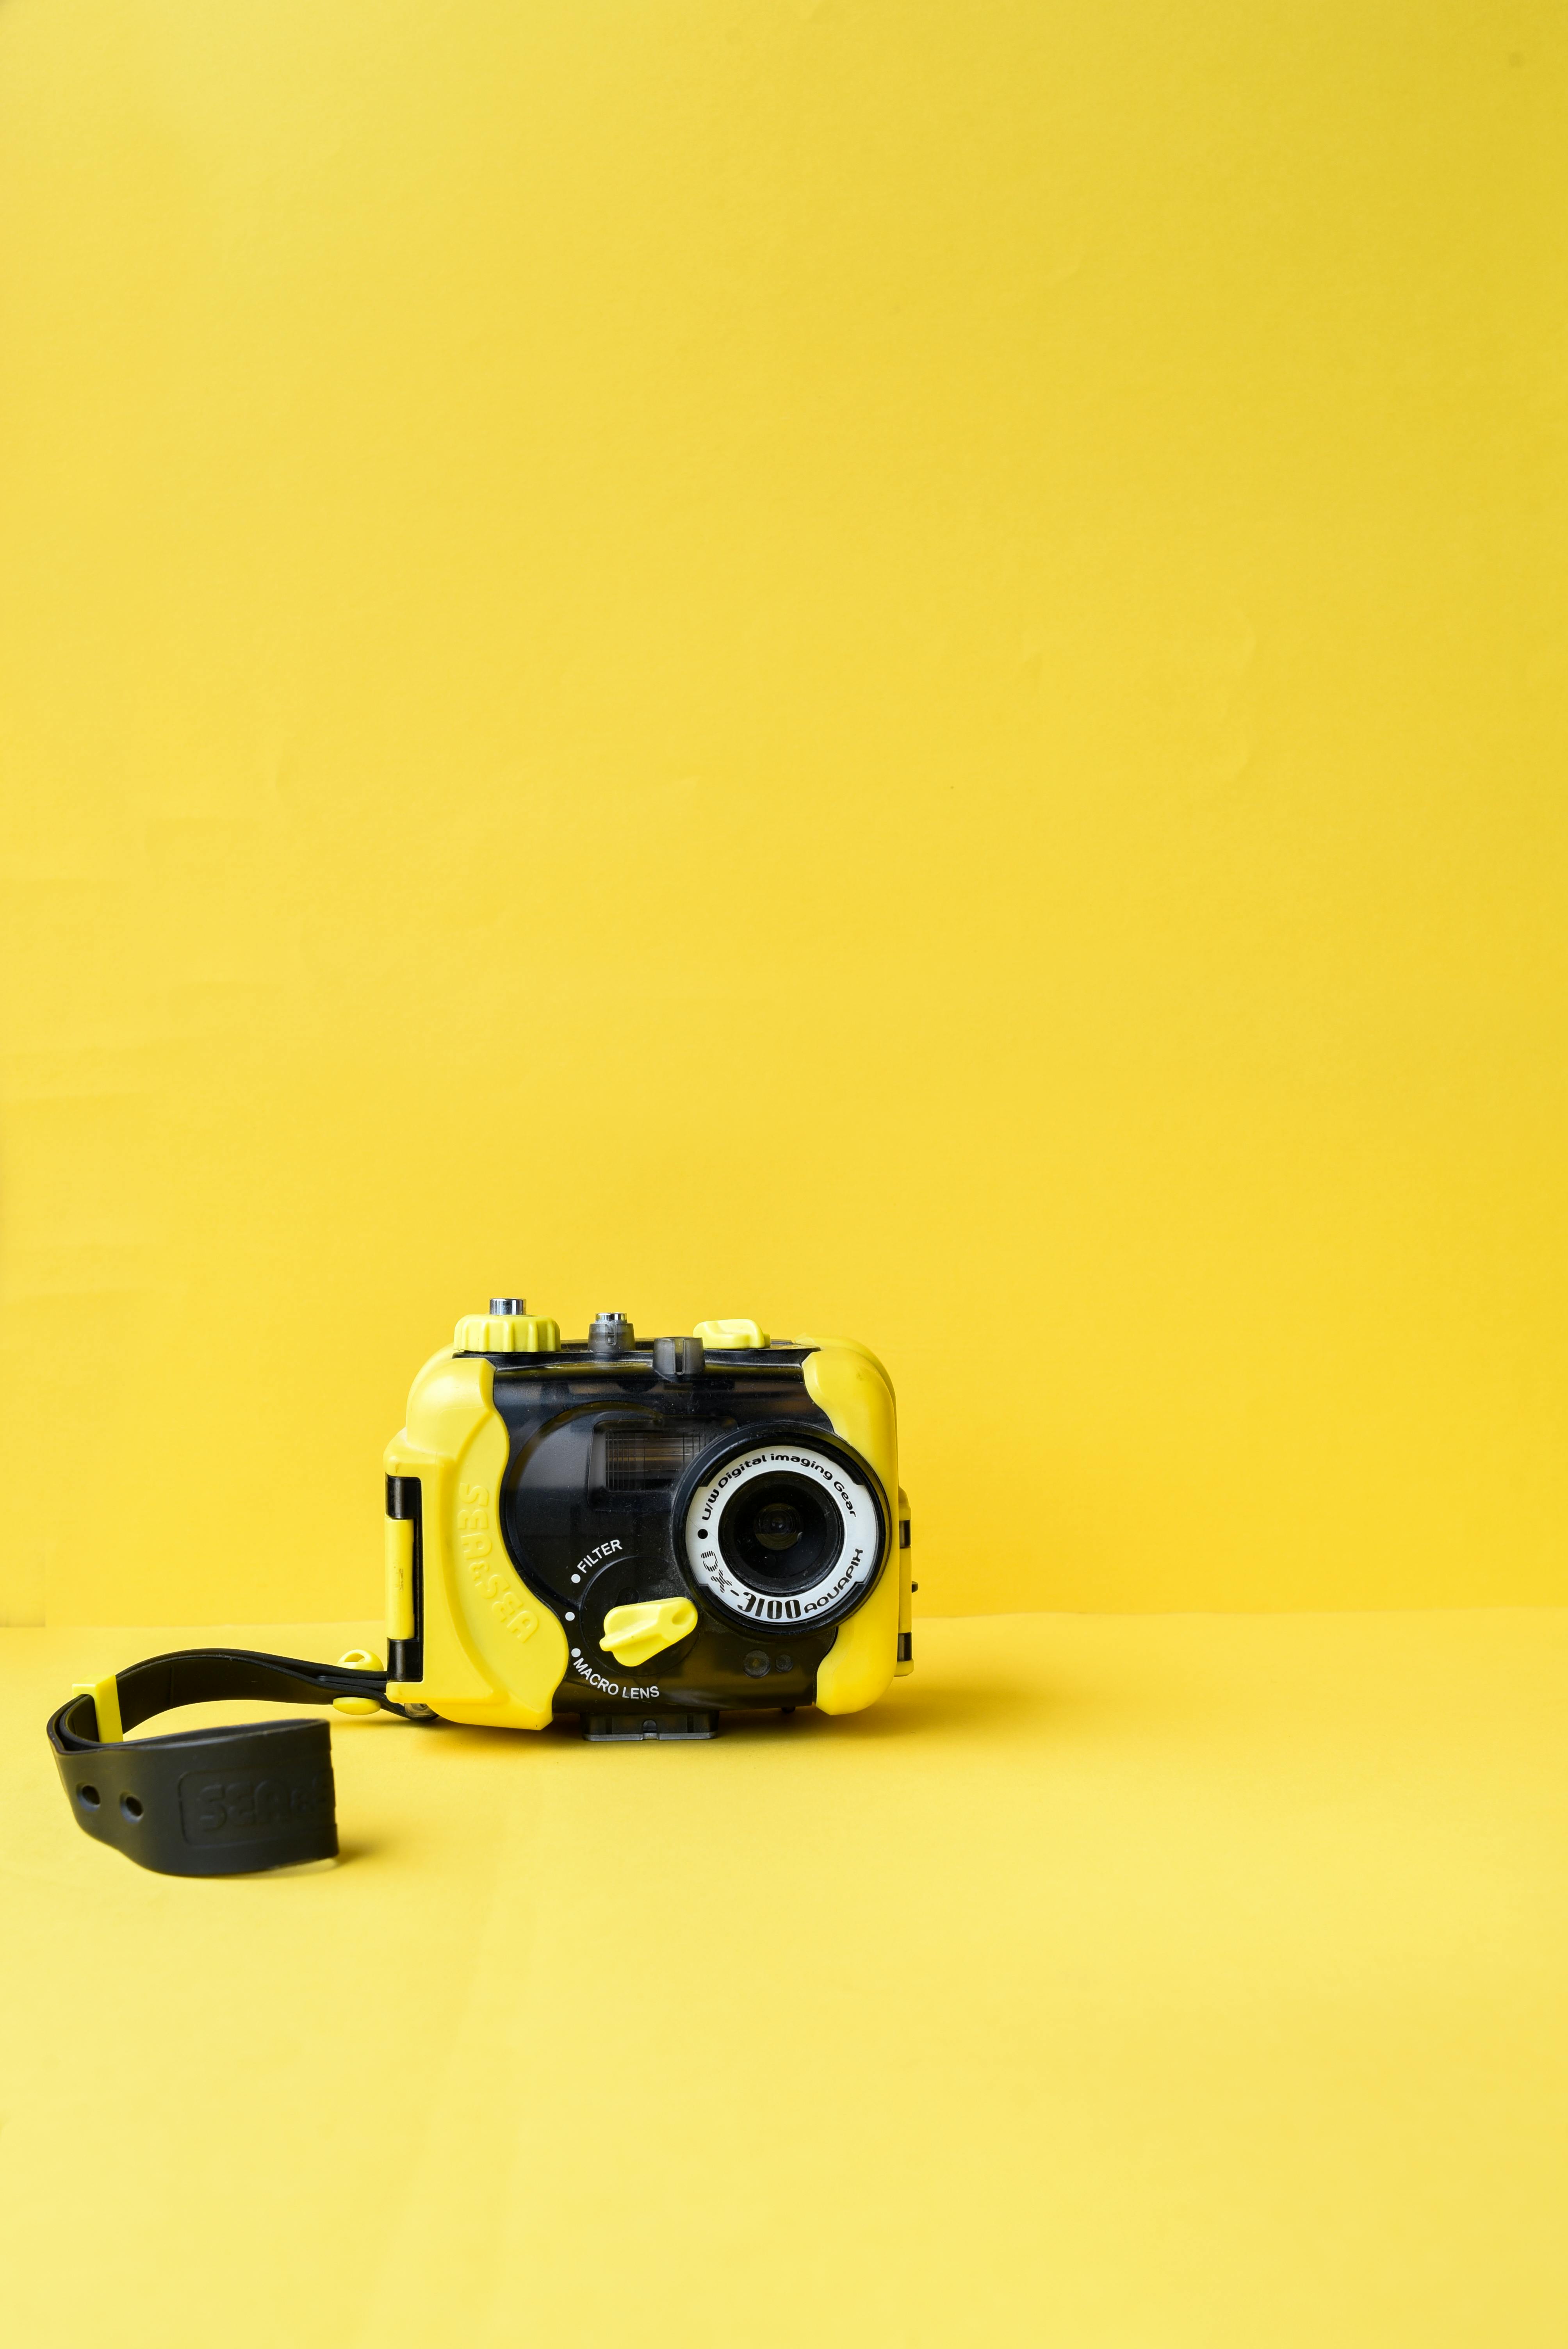 Waterproof Camera on Yellow Background · Free Stock Photo